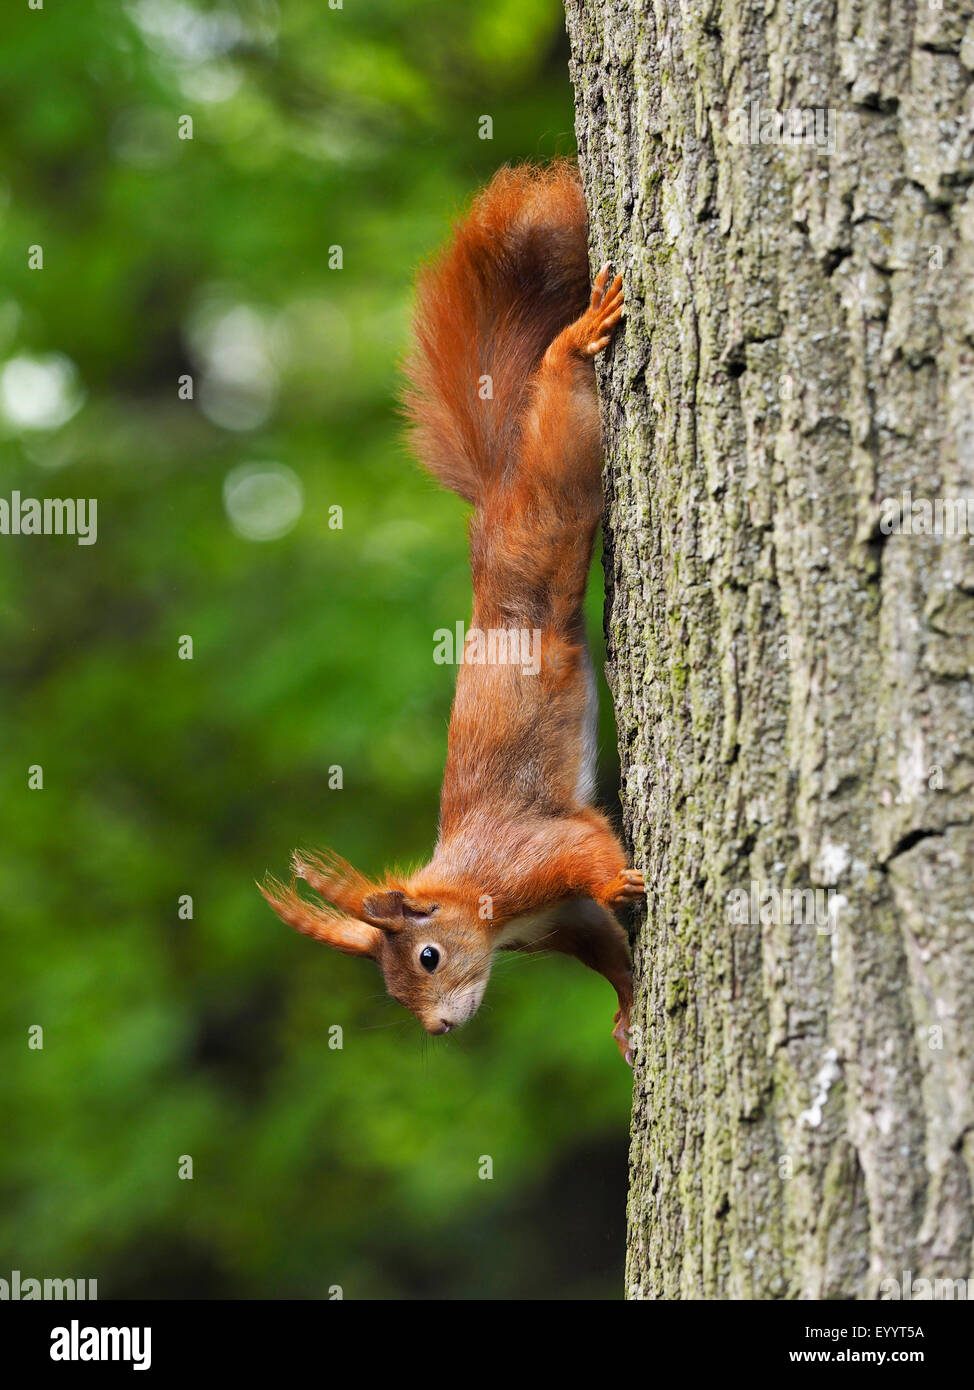 European red squirrel, Eurasian red squirrel (Sciurus vulgaris), rund dowm a tree trunk, Germany, Saxony Stock Photo